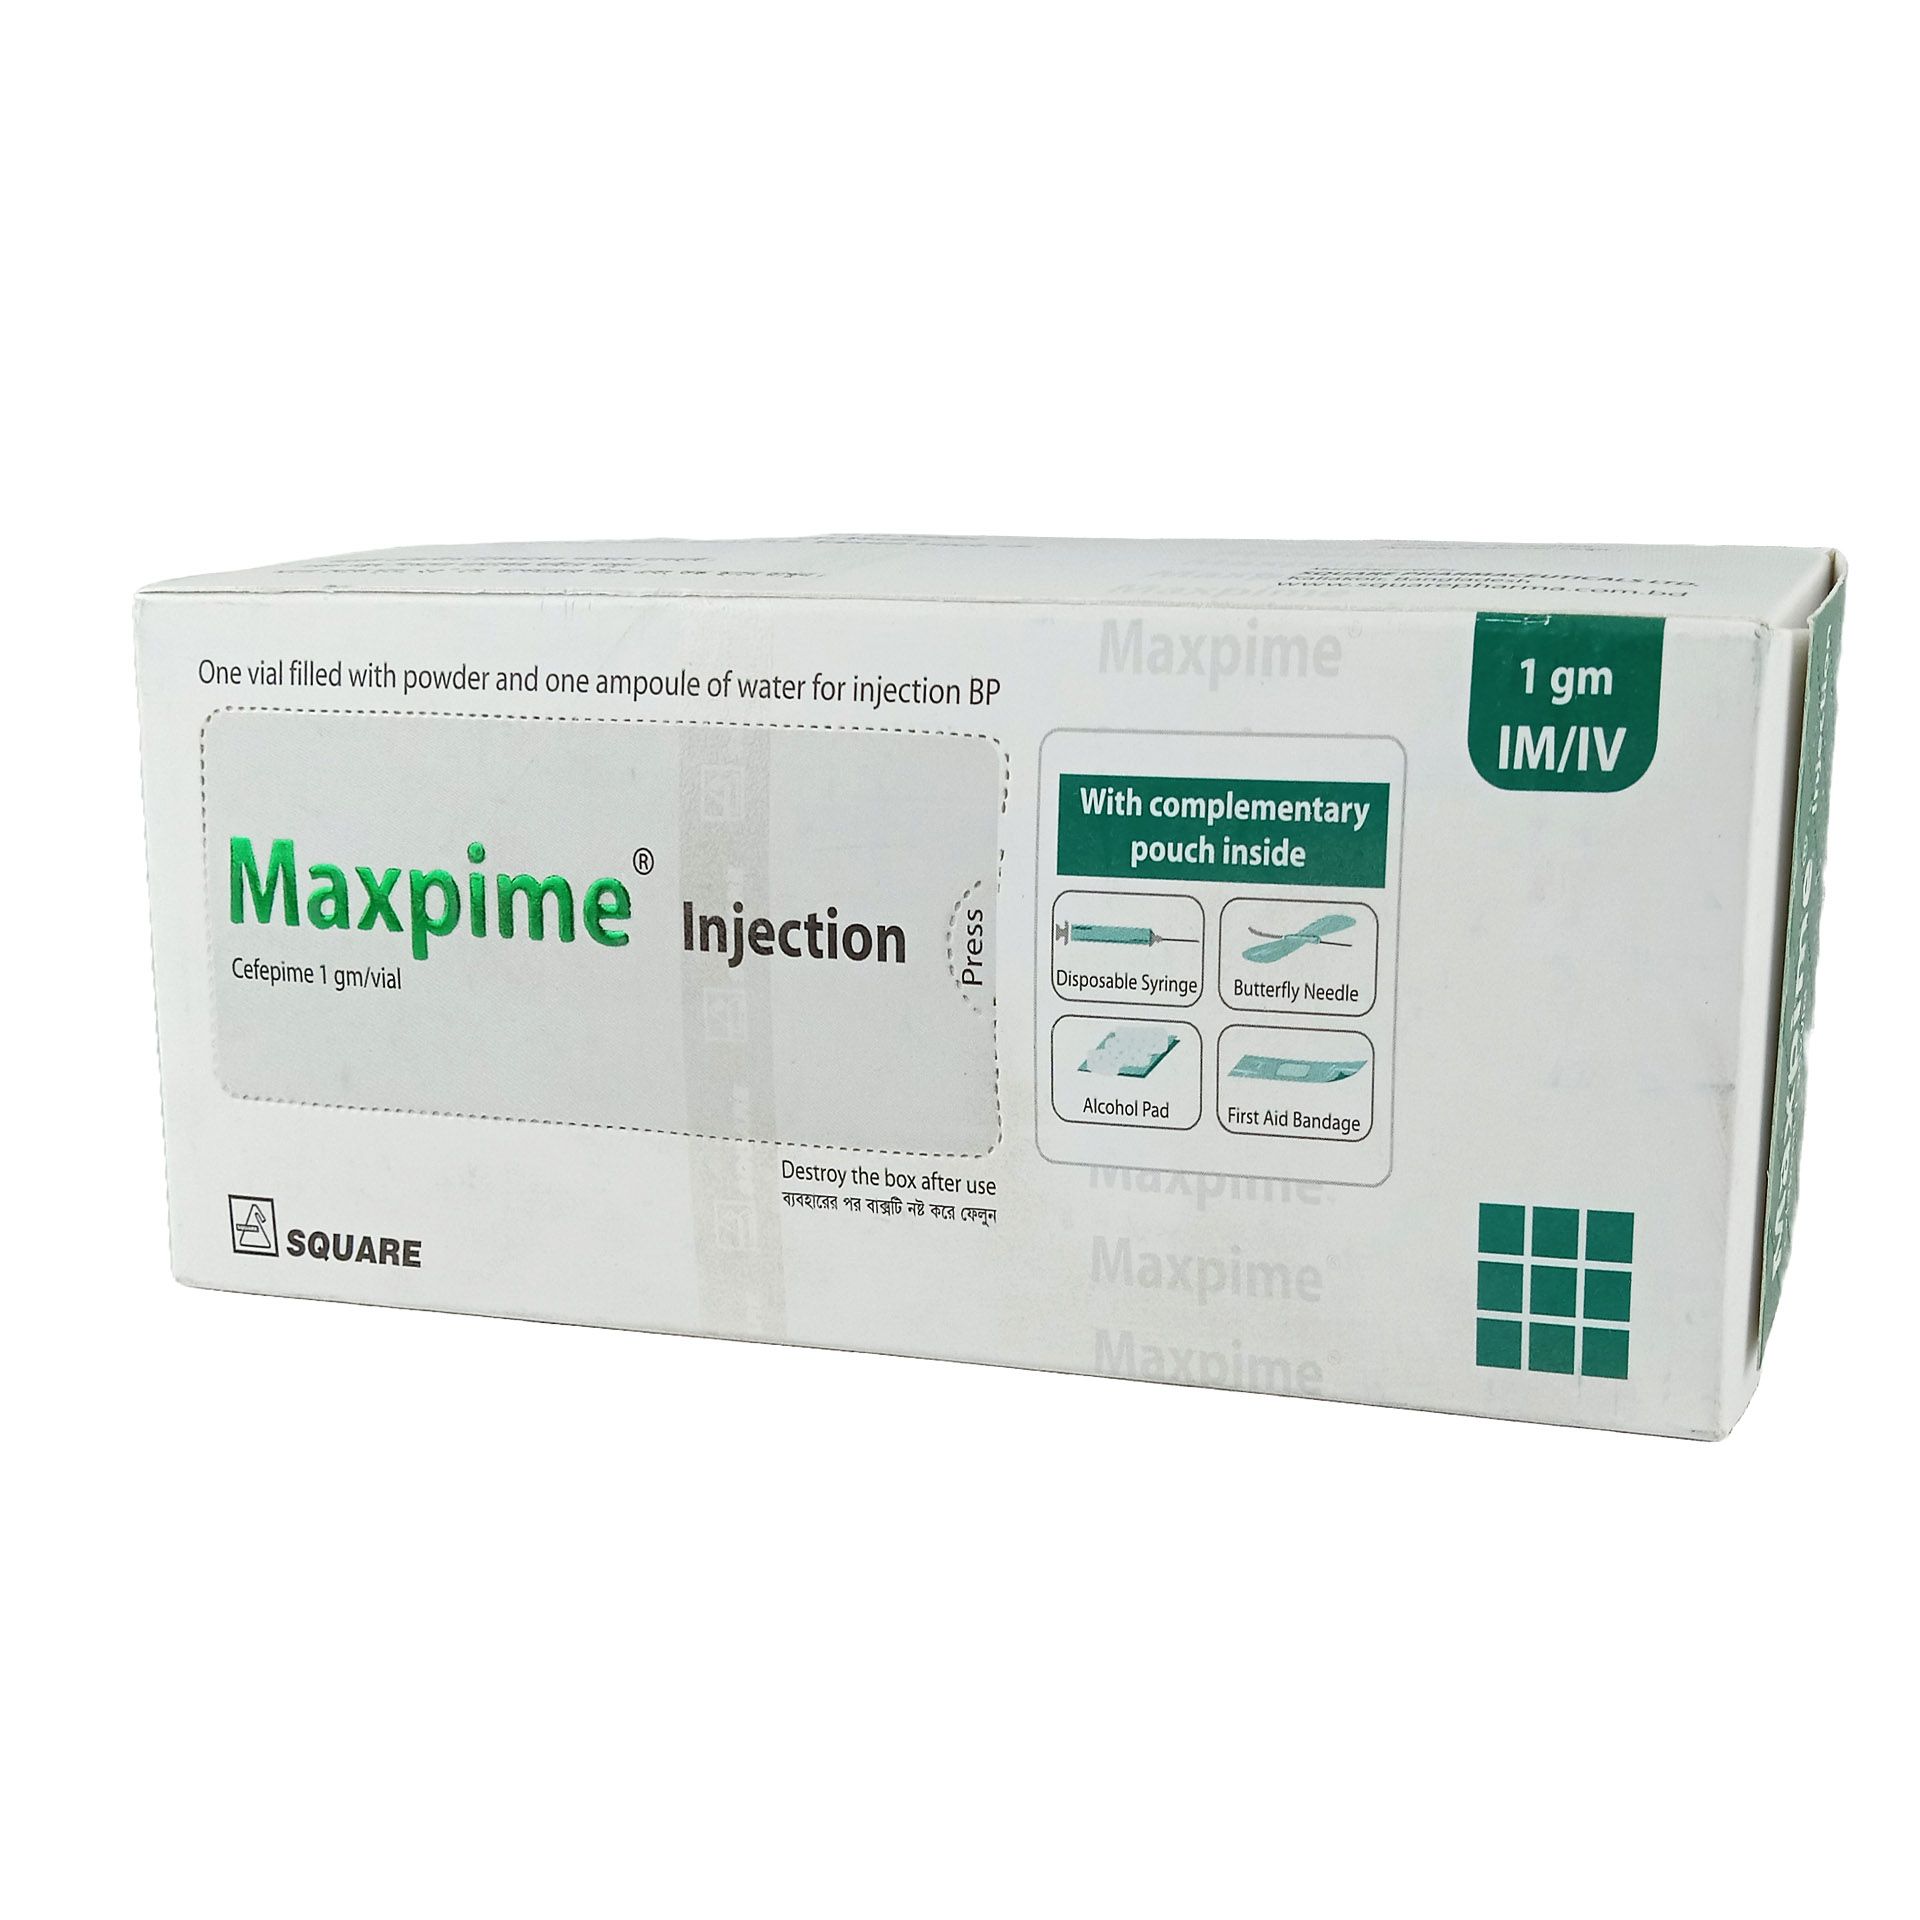 Maxpime IV/IM 1gm/vial Injection